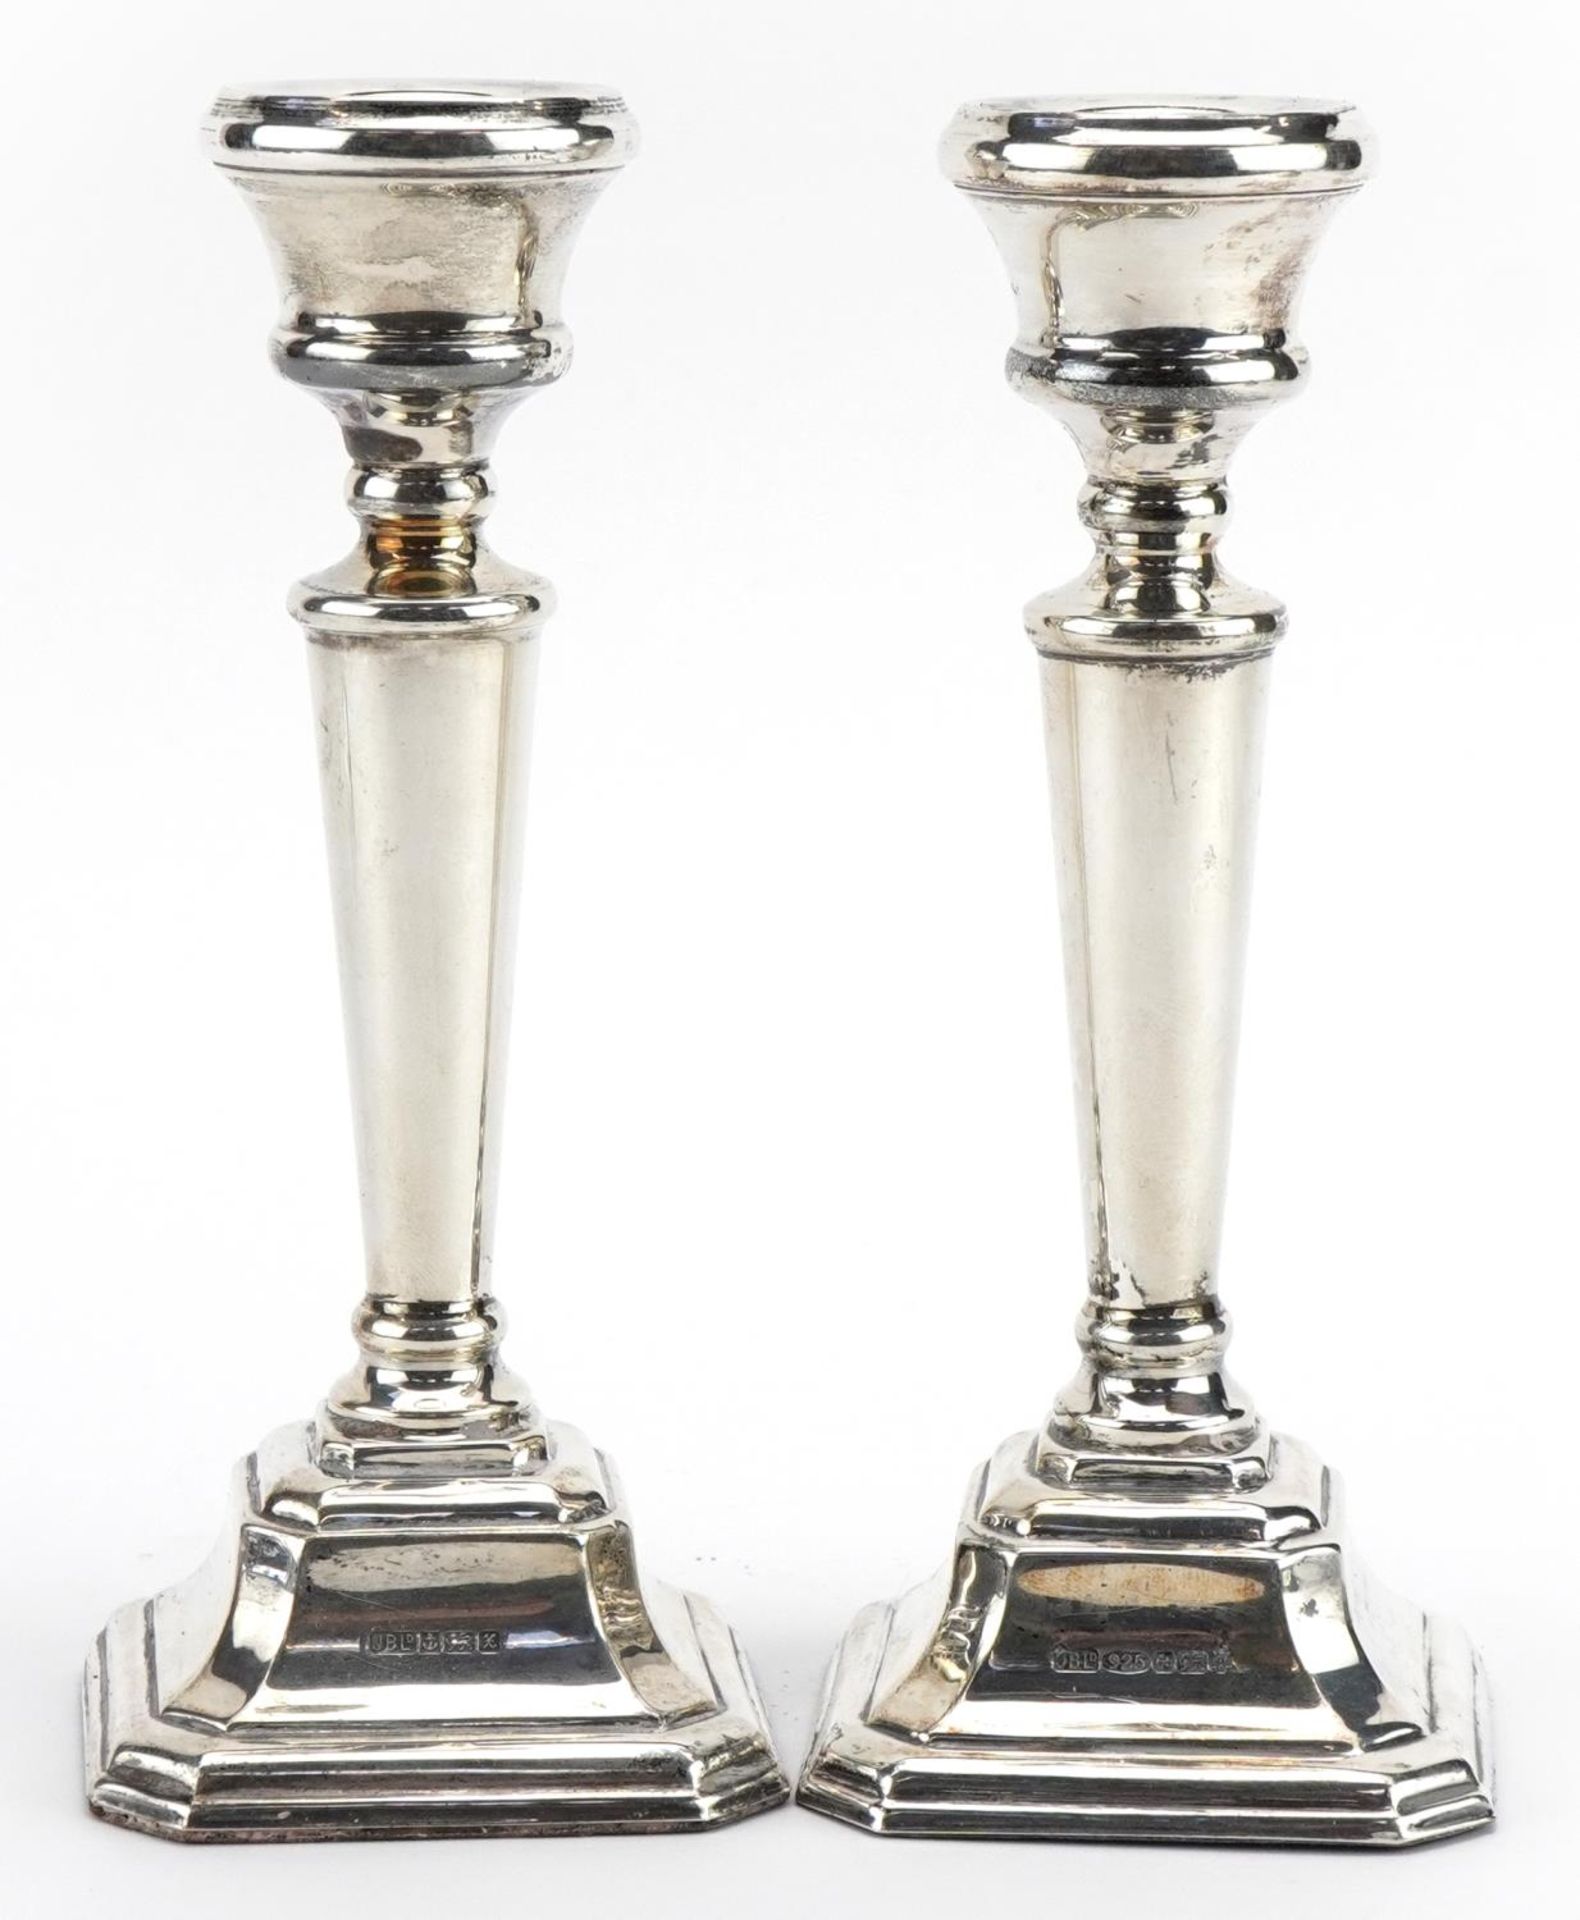 John Bull Ltd, matched pair of Elizabeth II silver square base candlesticks, Birmingham 1997 and - Image 2 of 4